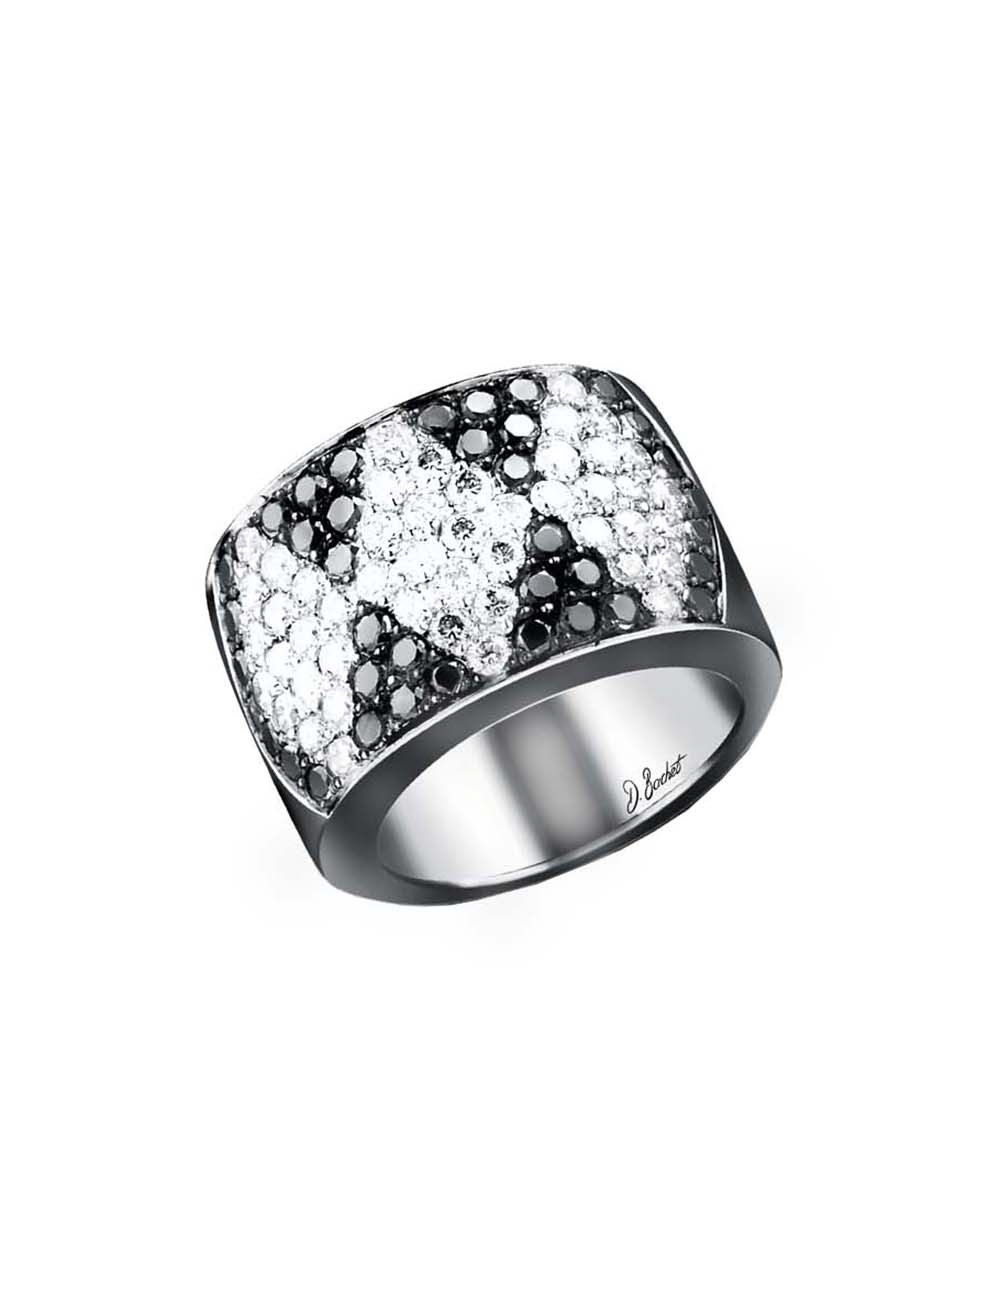 Elegant ring from the Charleston line, blending white and black diamonds, symbol of French sophistication and ethics.